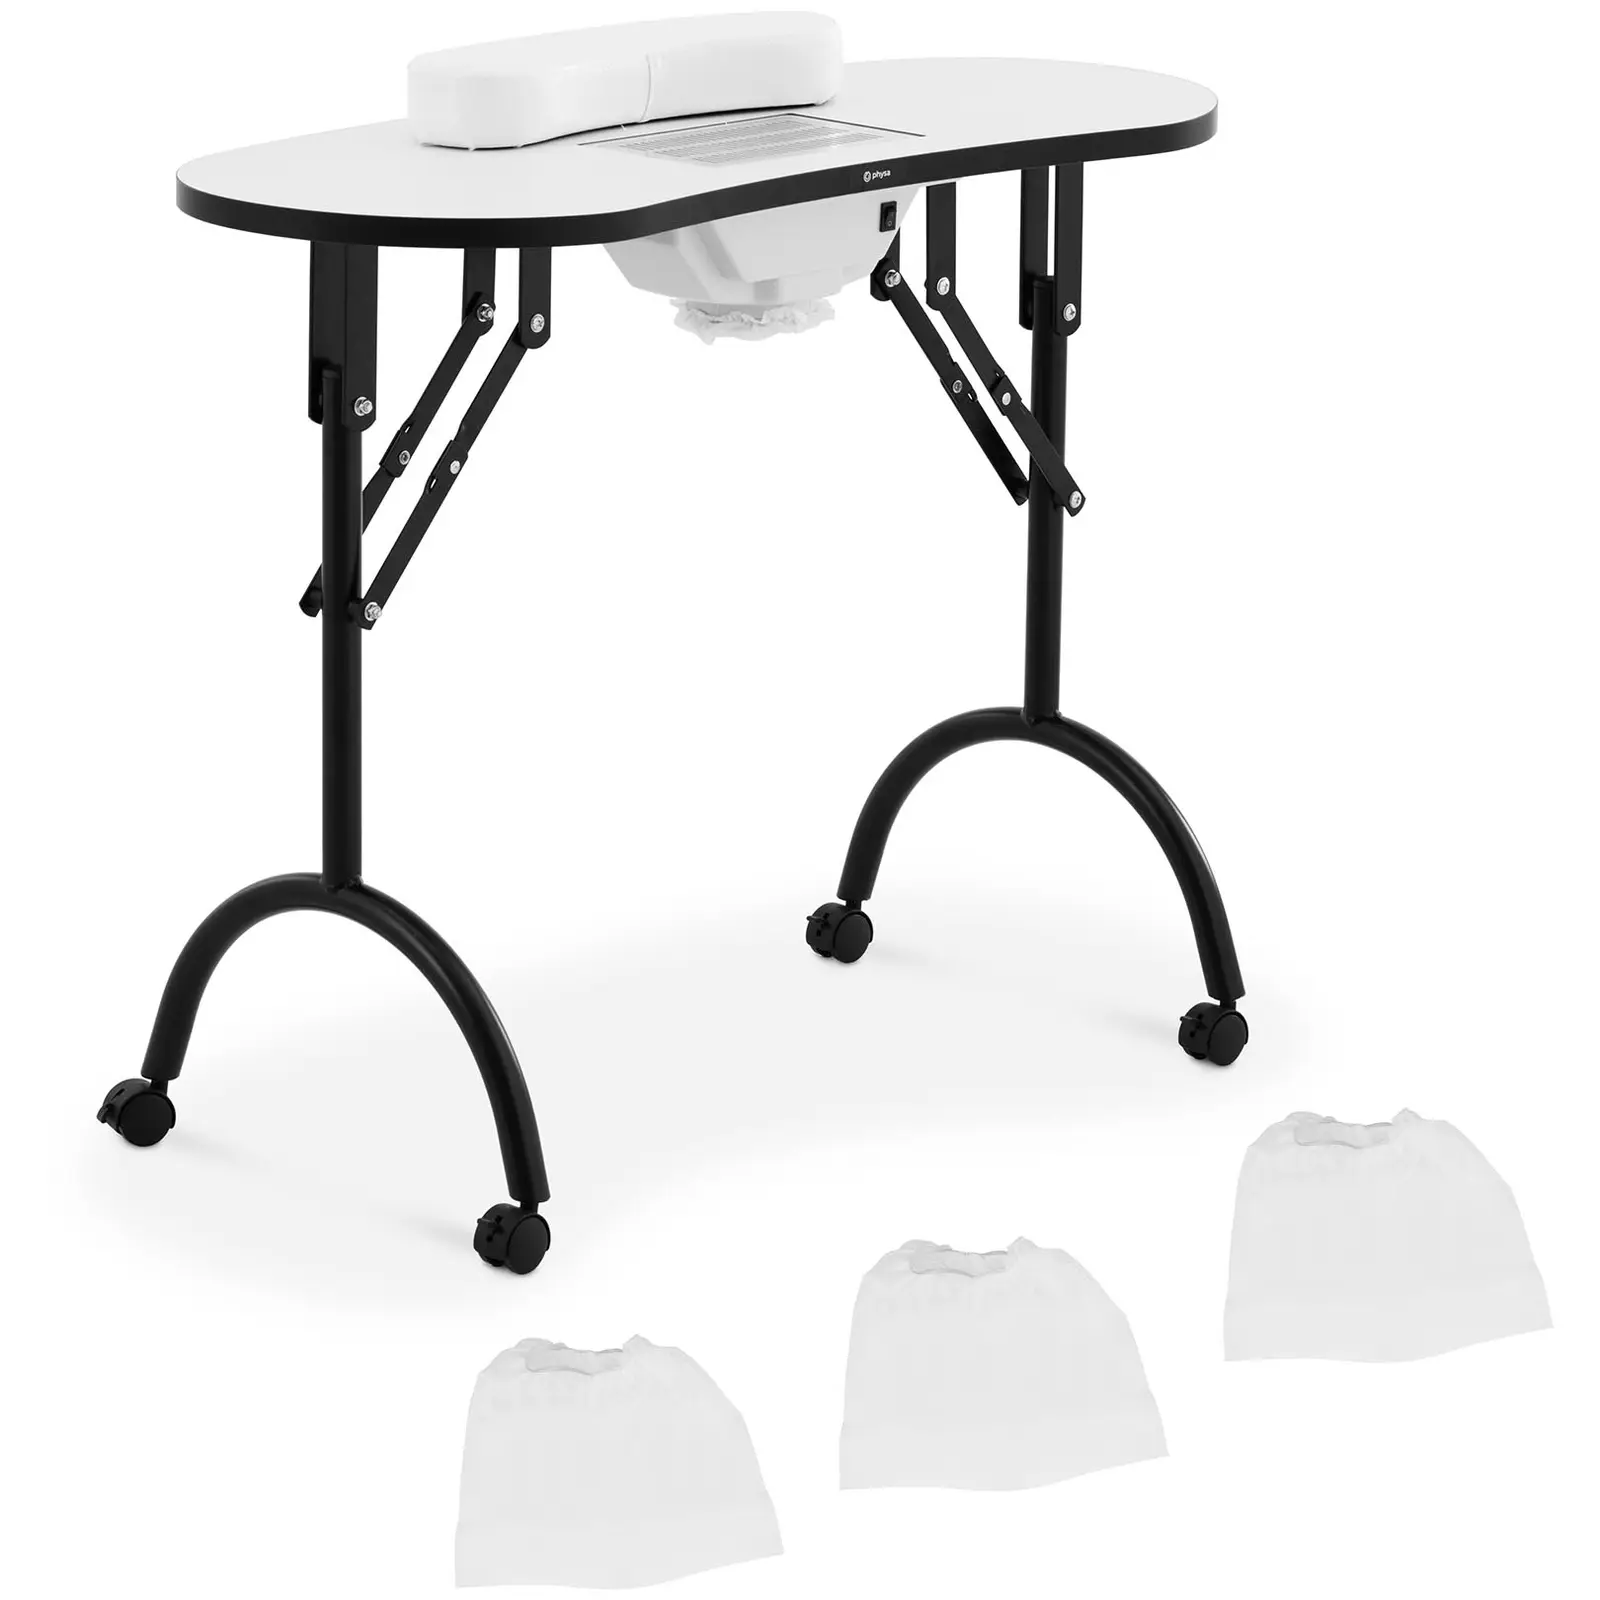 Nabíjací stôl skladací - biely - 4 kolesá - sacie